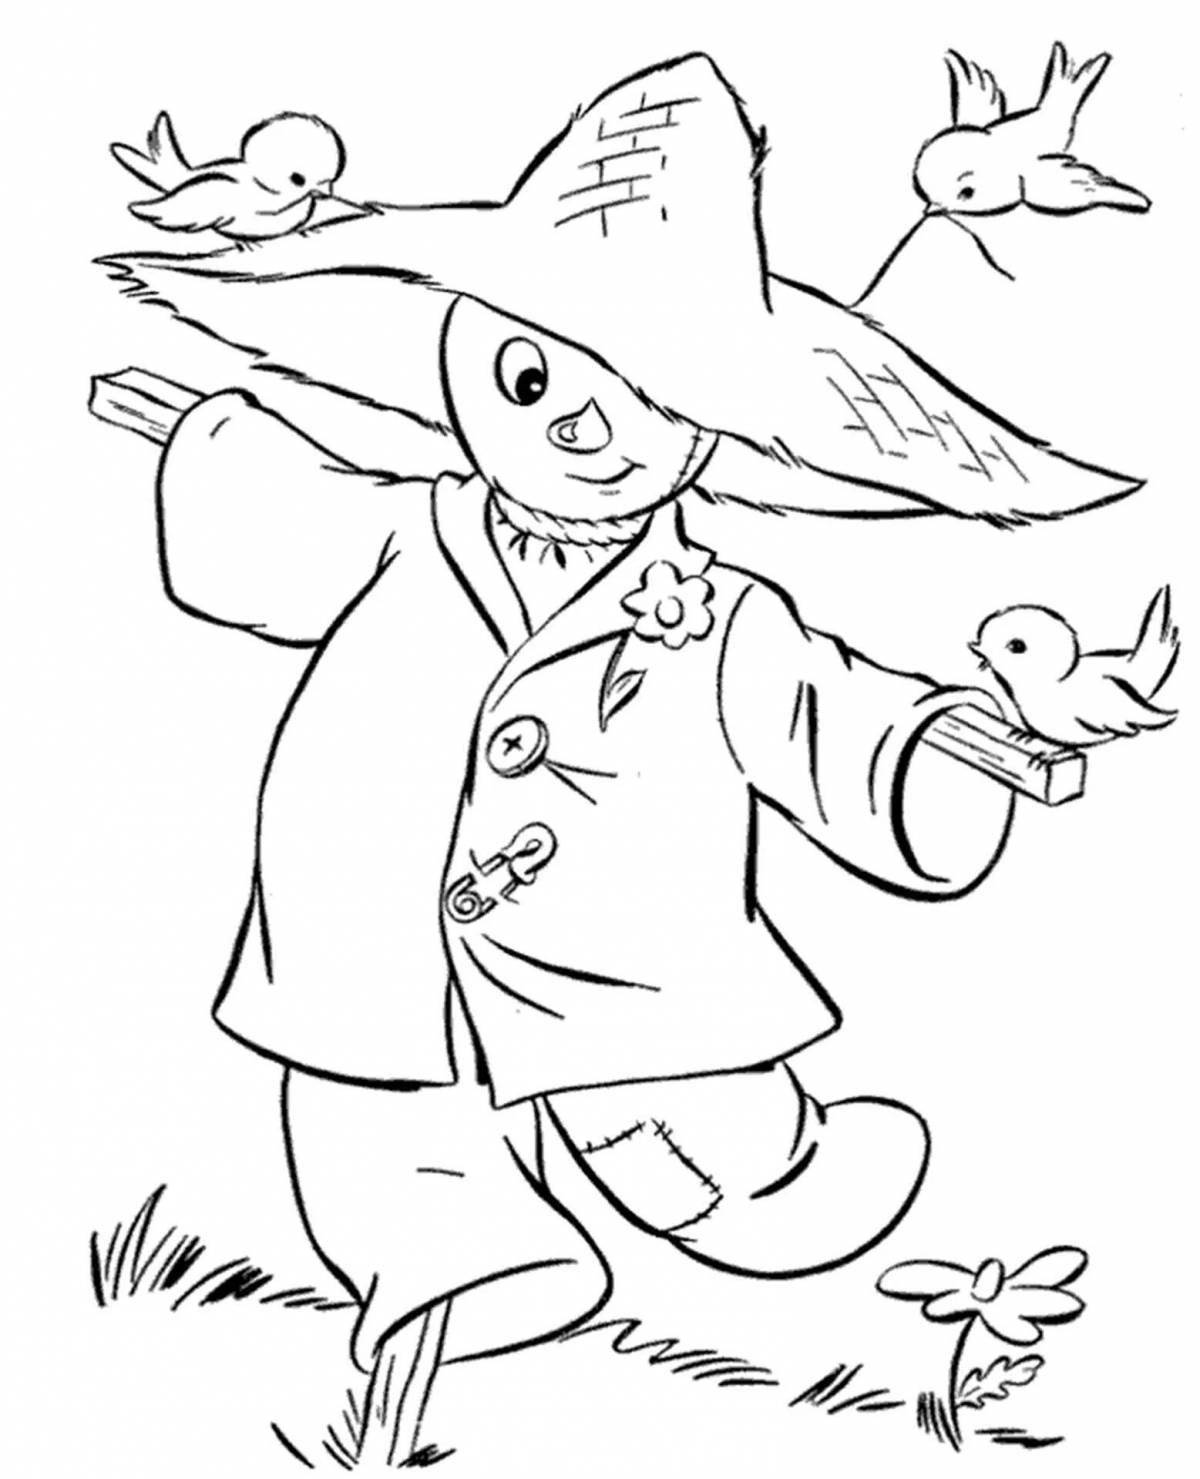 Scarecrow #2